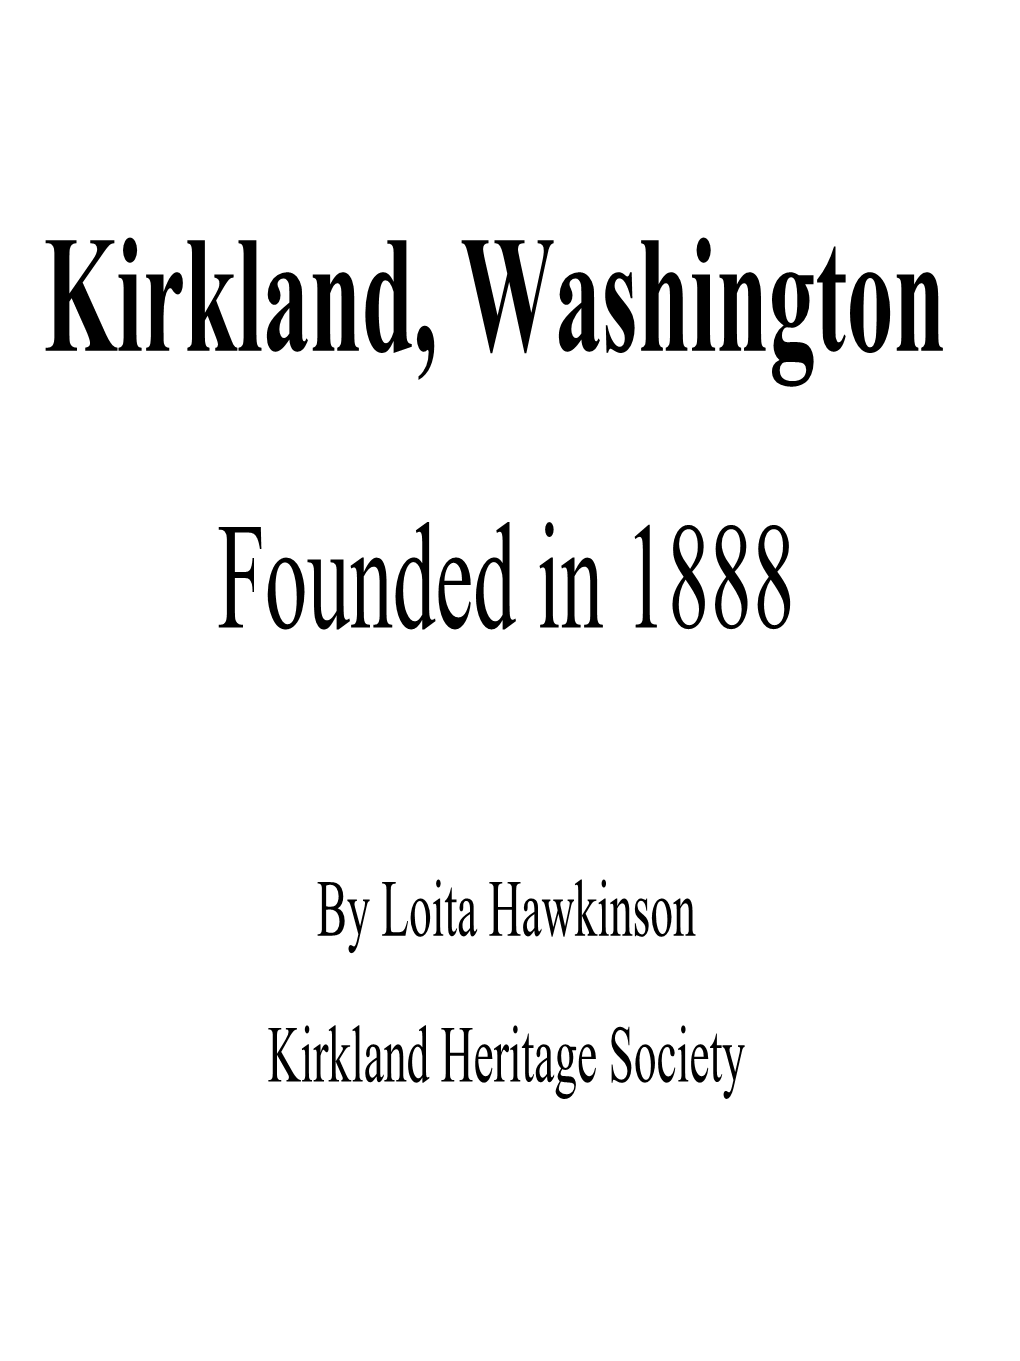 Kirkland, Washington Founded in 1888